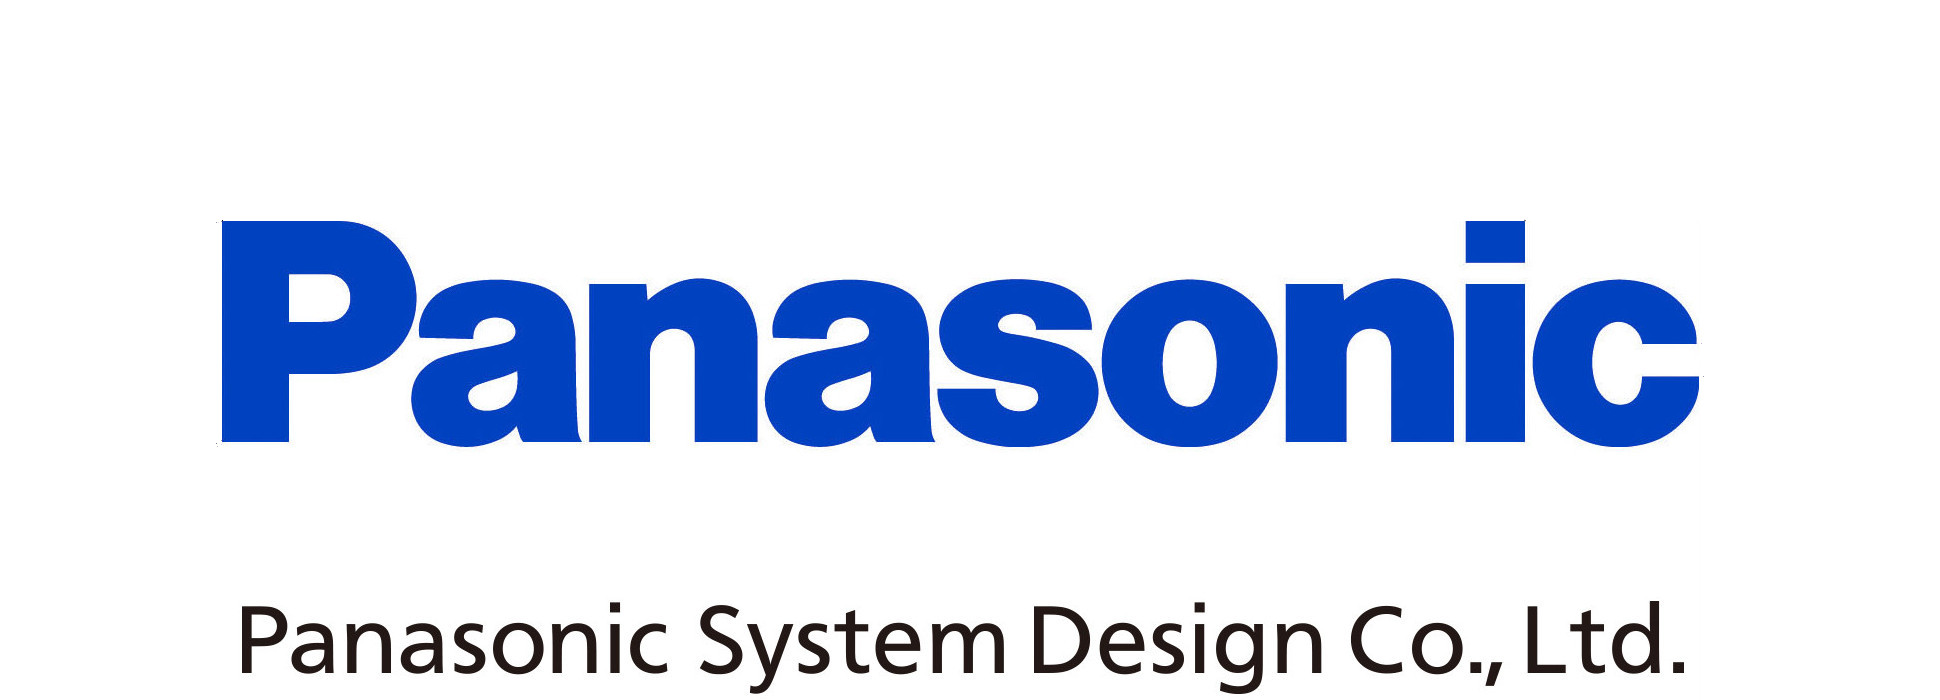 PanasonicSystemDesign